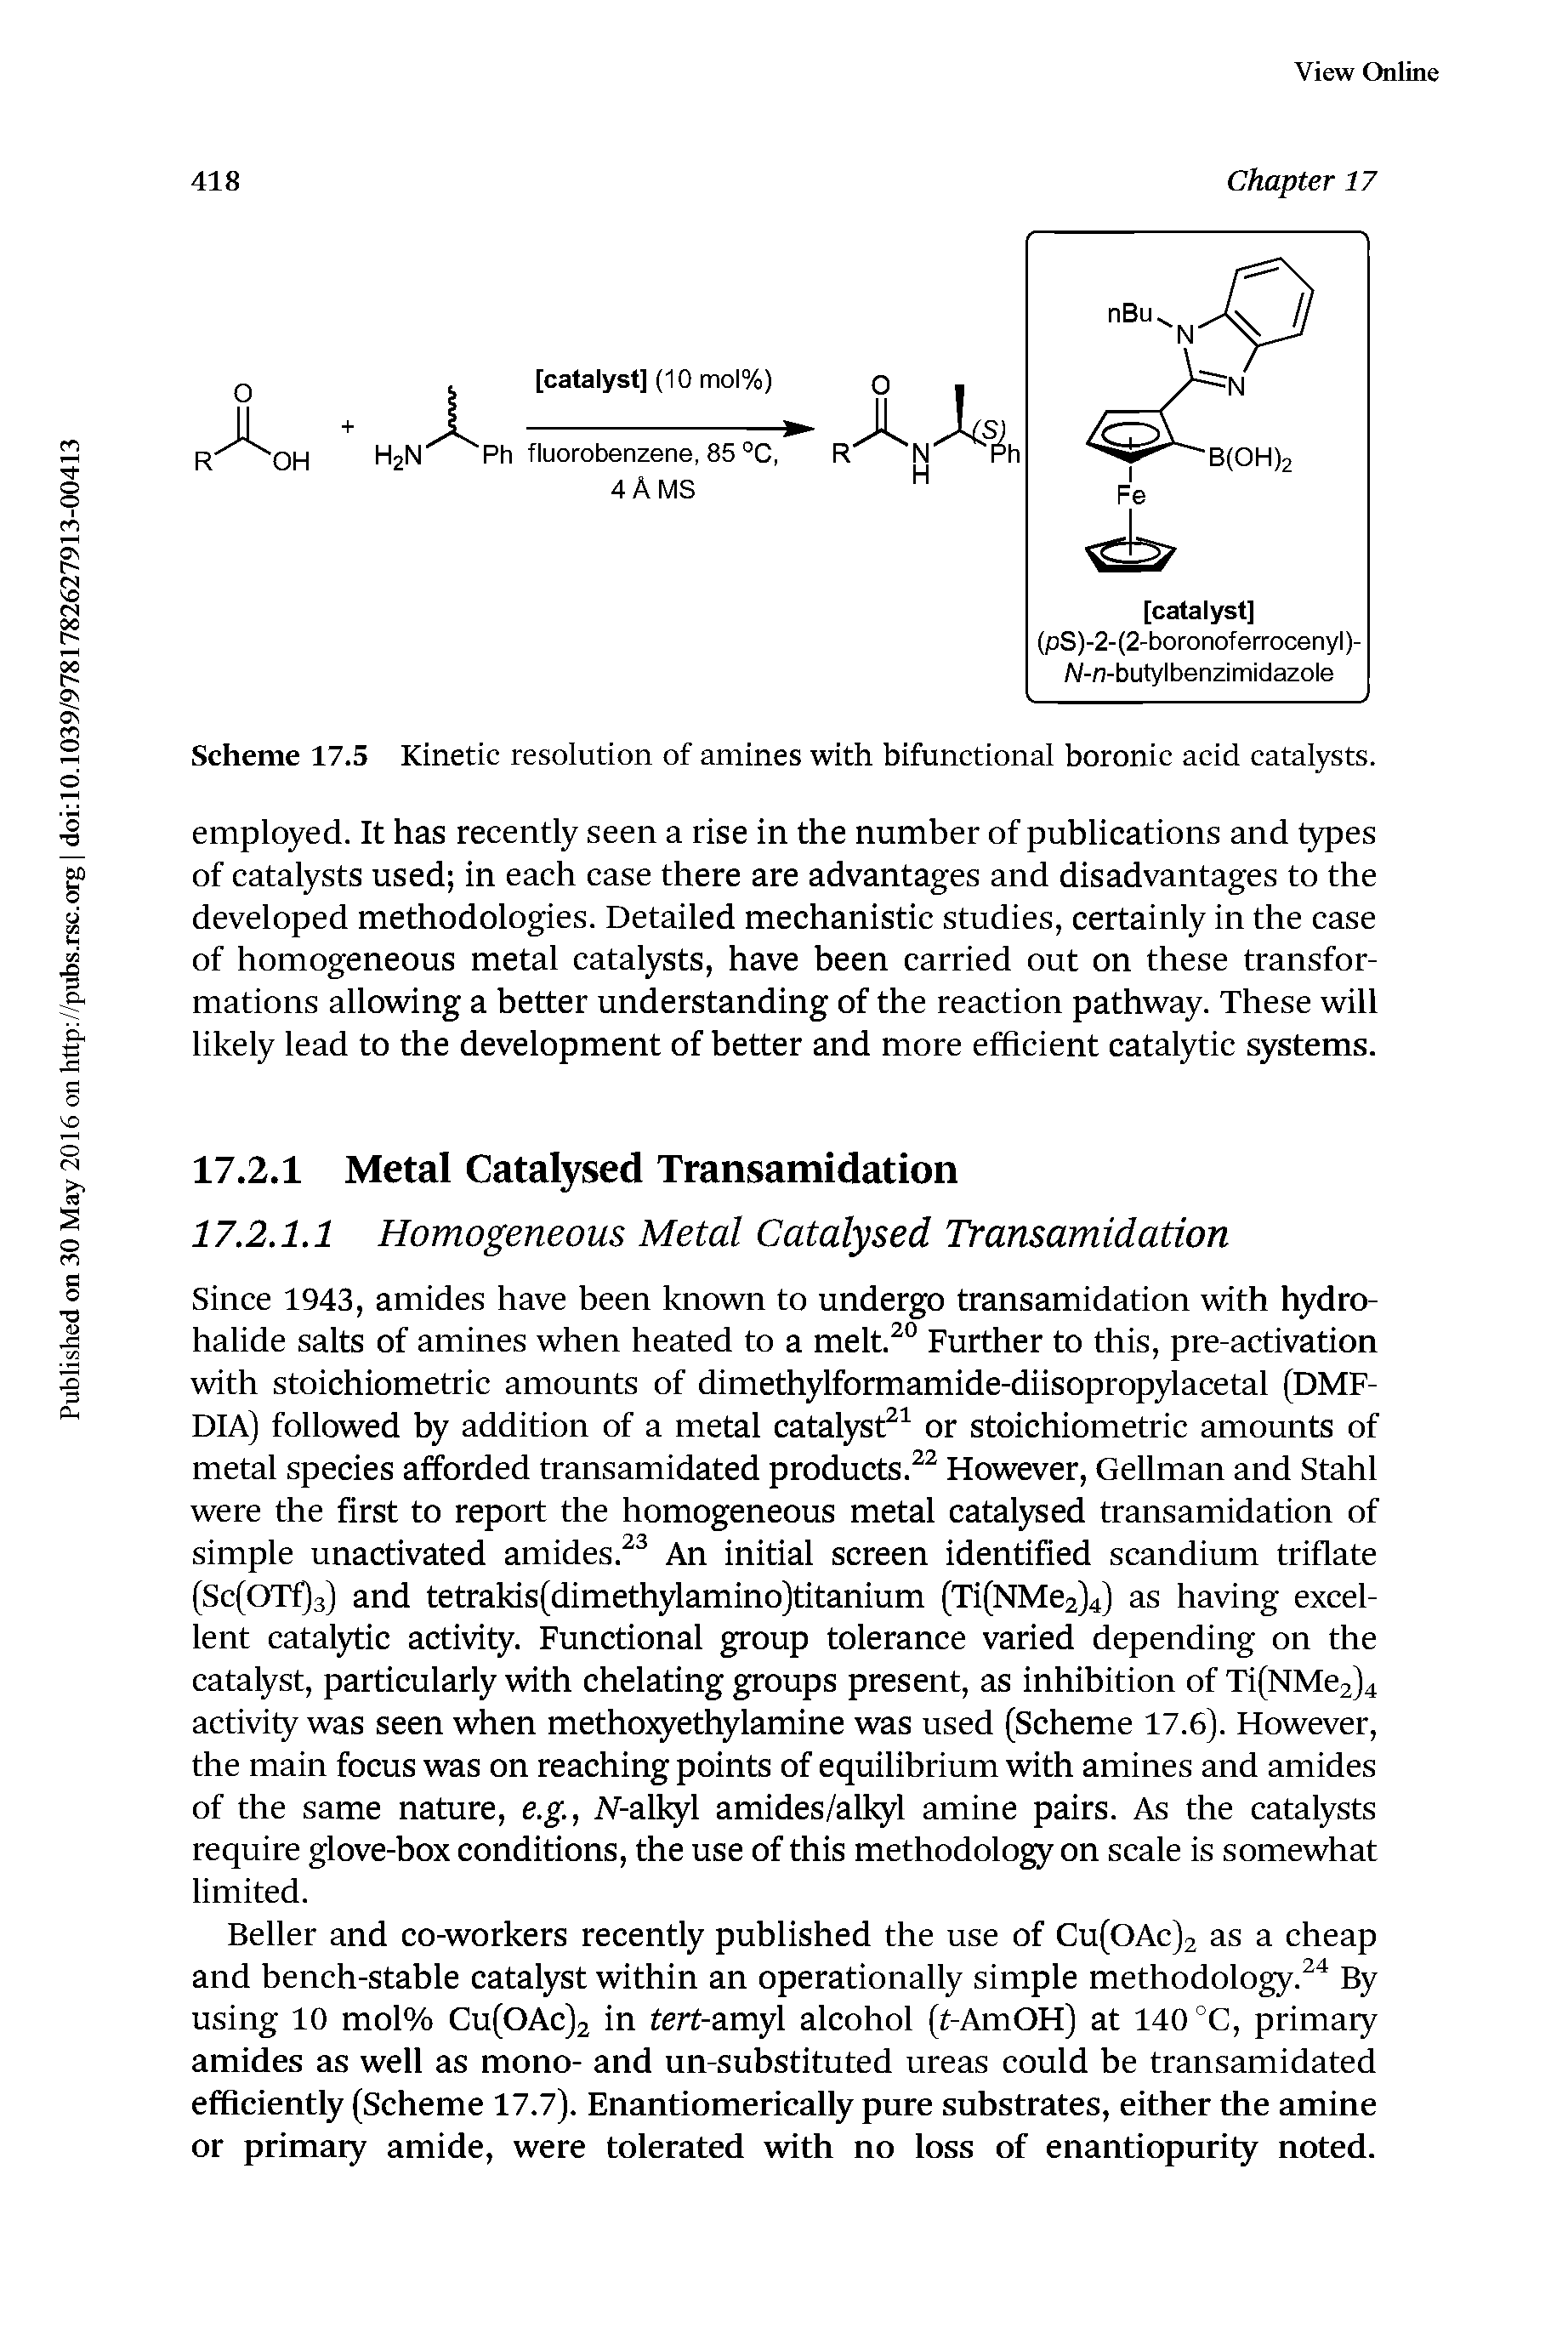 Scheme 17.5 Kinetic resolution of amines with bifunctional boronic acid catalysts.